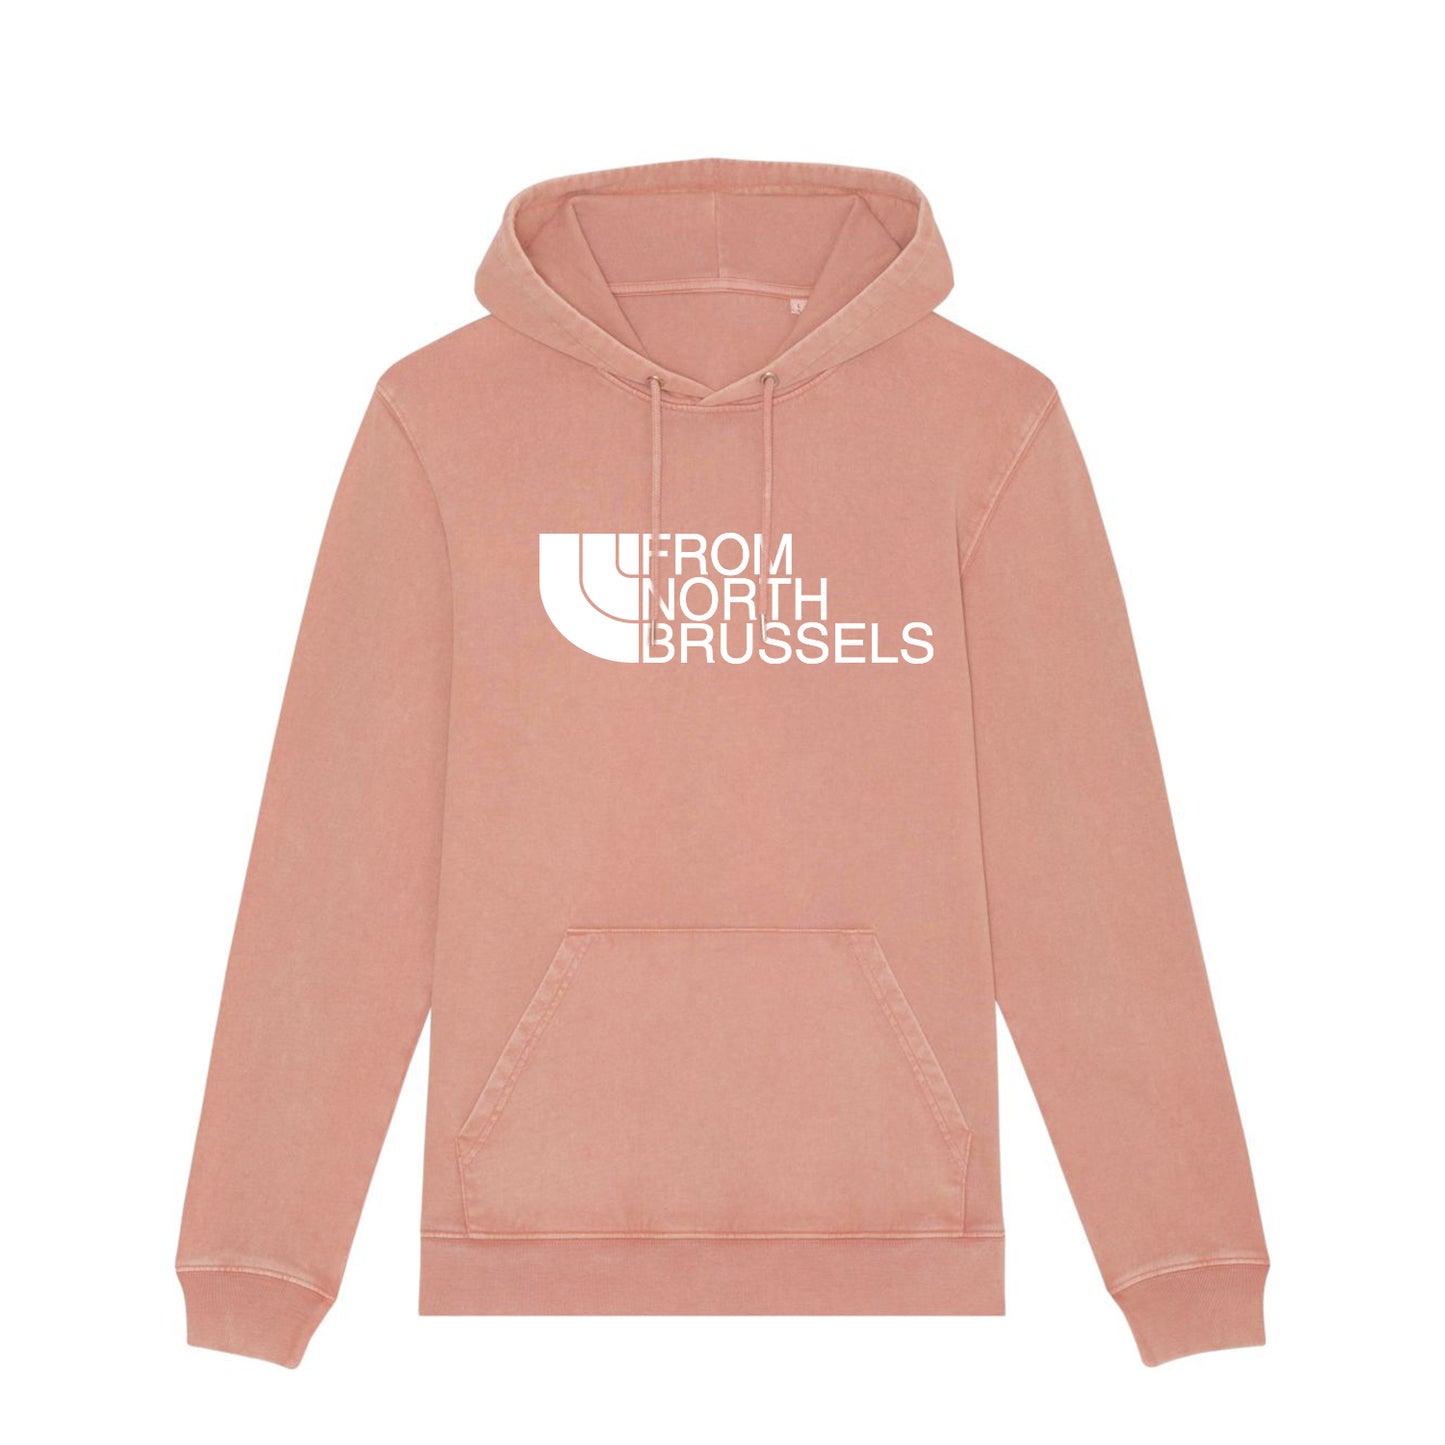 Sweat-shirt à capuche Unisexe "From North Brussels"™ Rose délavé